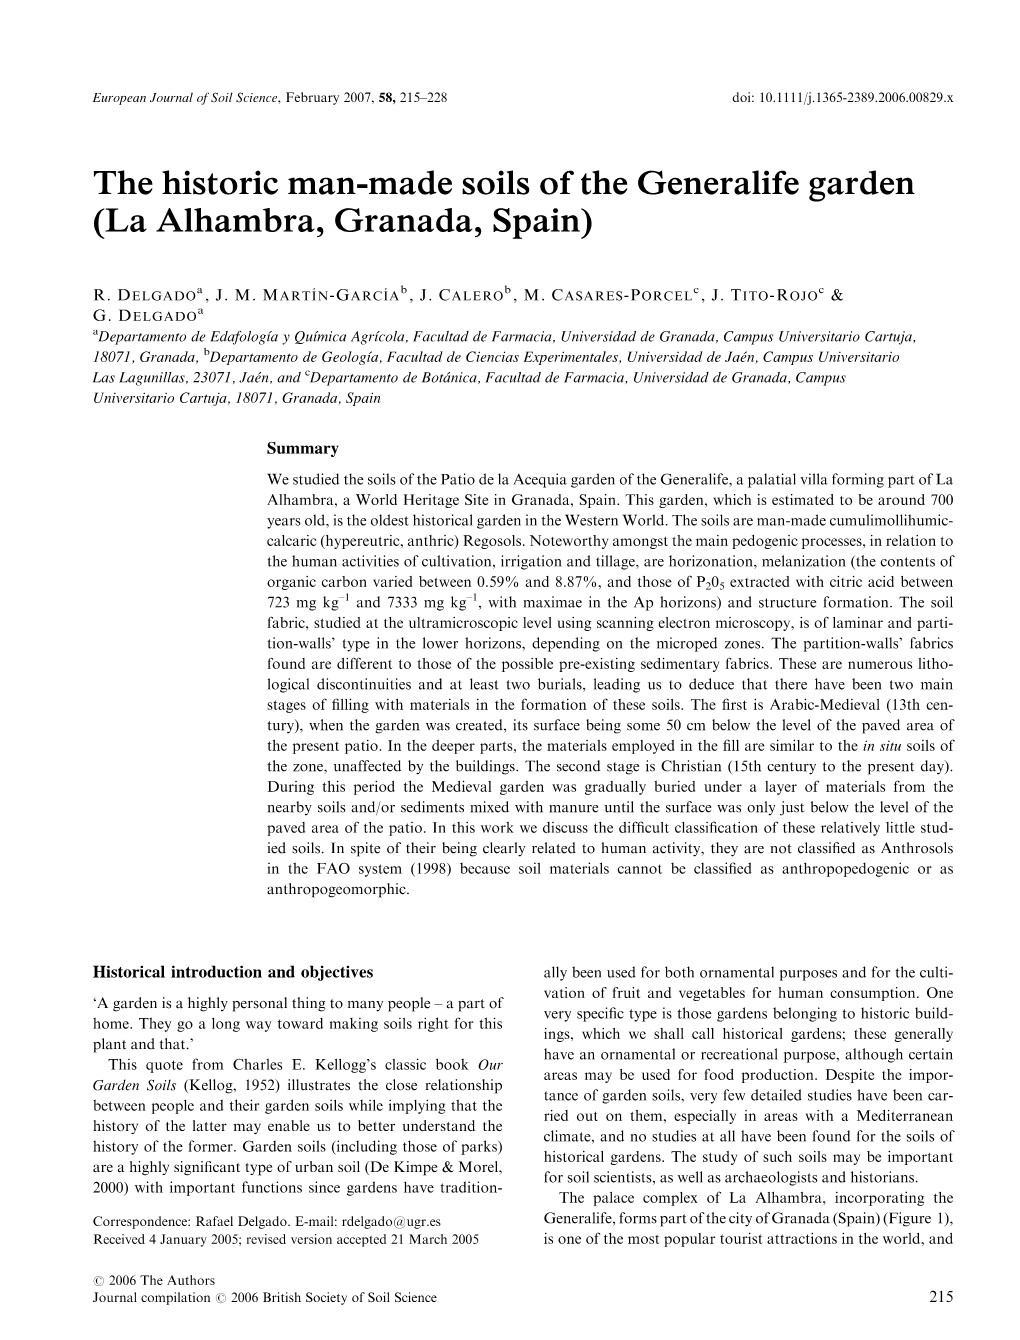 The Historic Man-Made Soils of the Generalife Garden (La Alhambra, Granada, Spain)